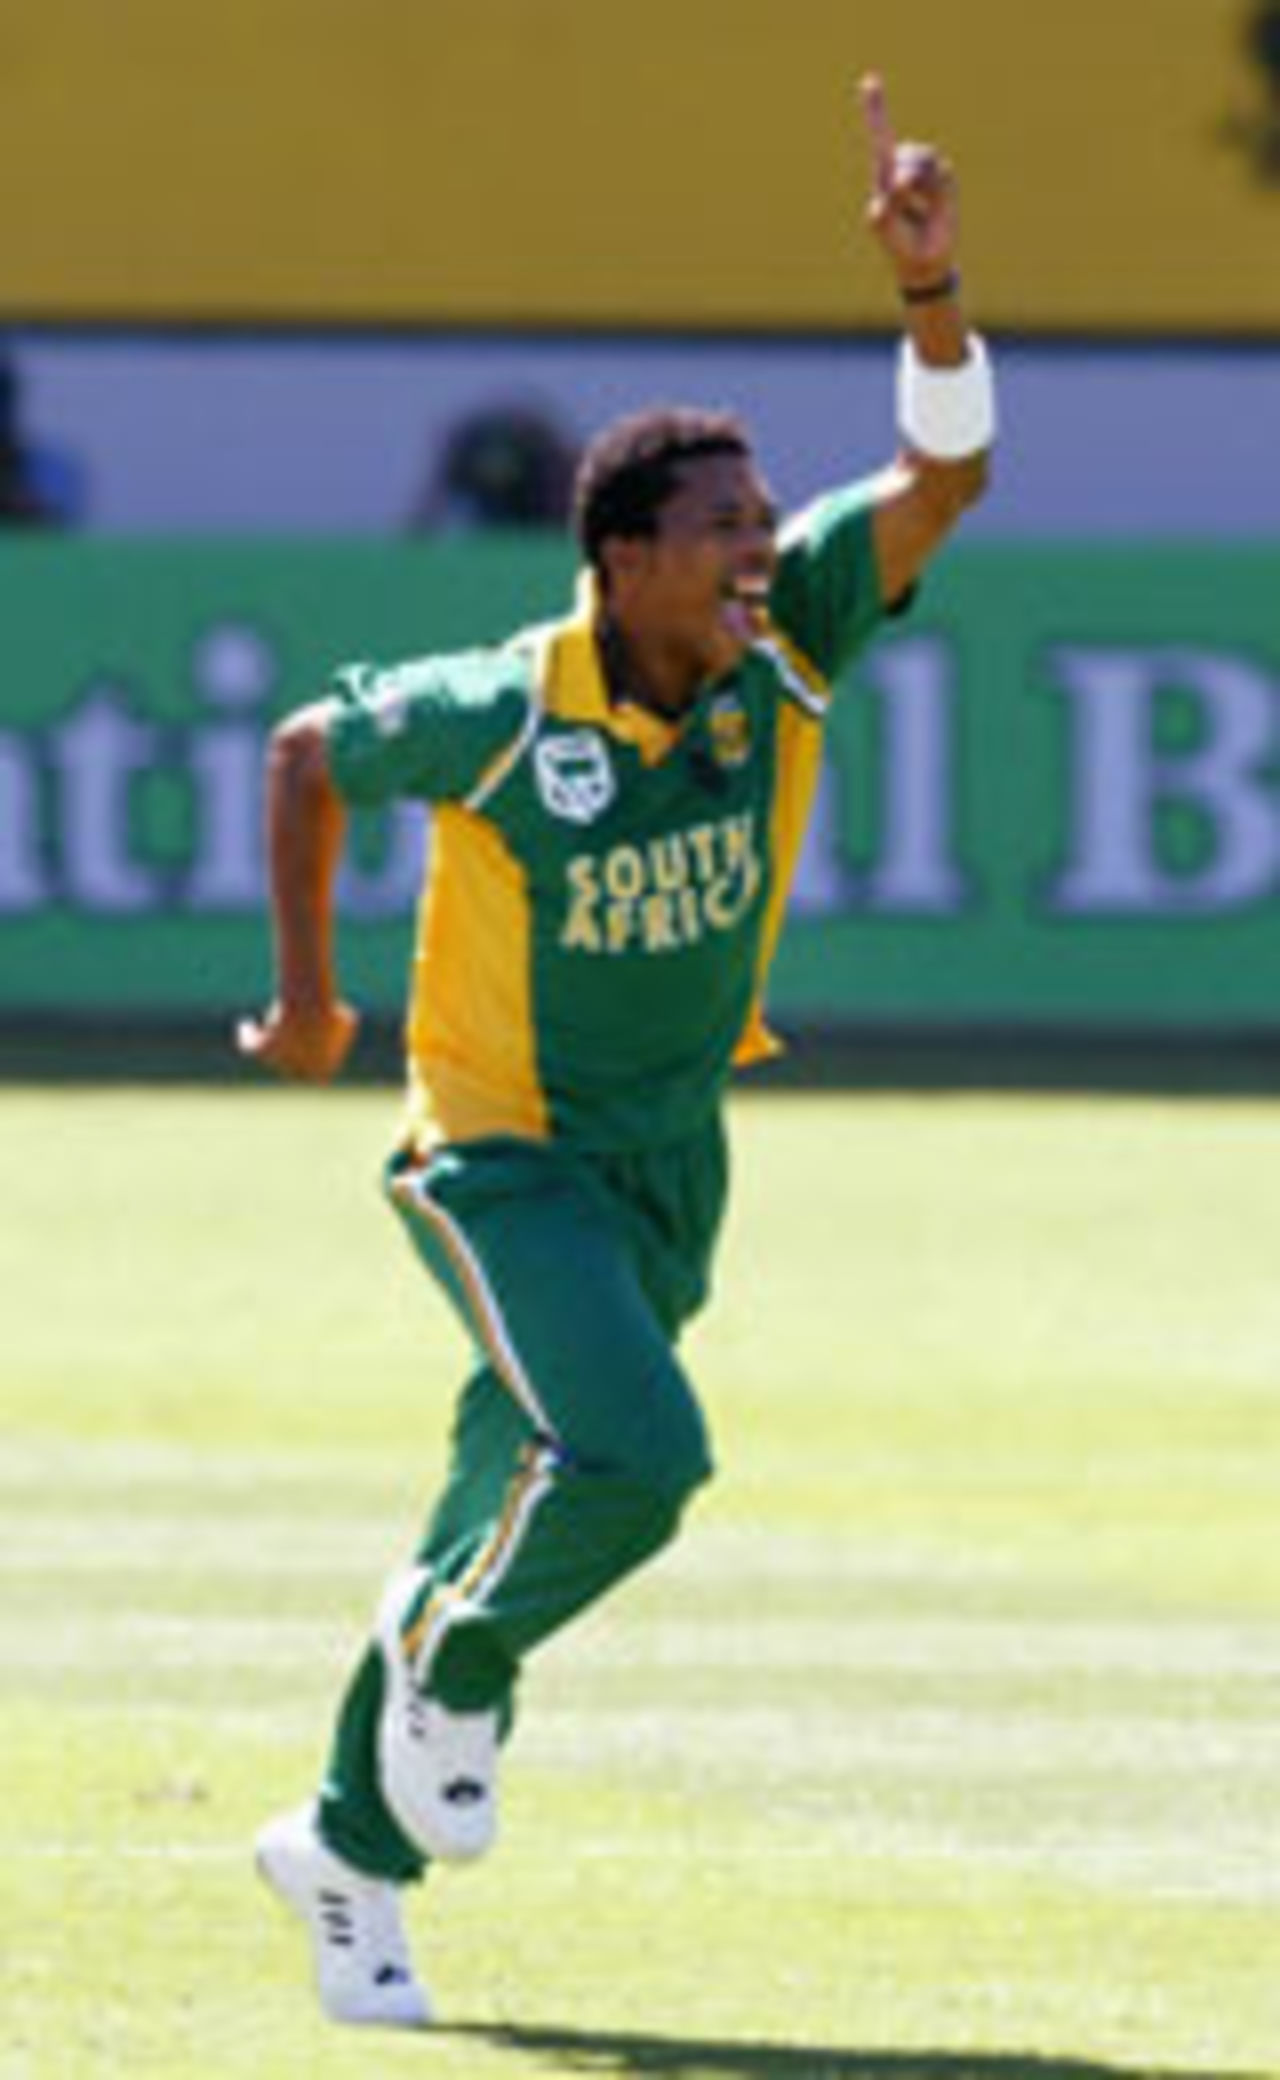 Makhaya Ntini celebrates a wicket, New Zealand v South Africa, 1st ODI, Auckland, Febraury 13, 2004